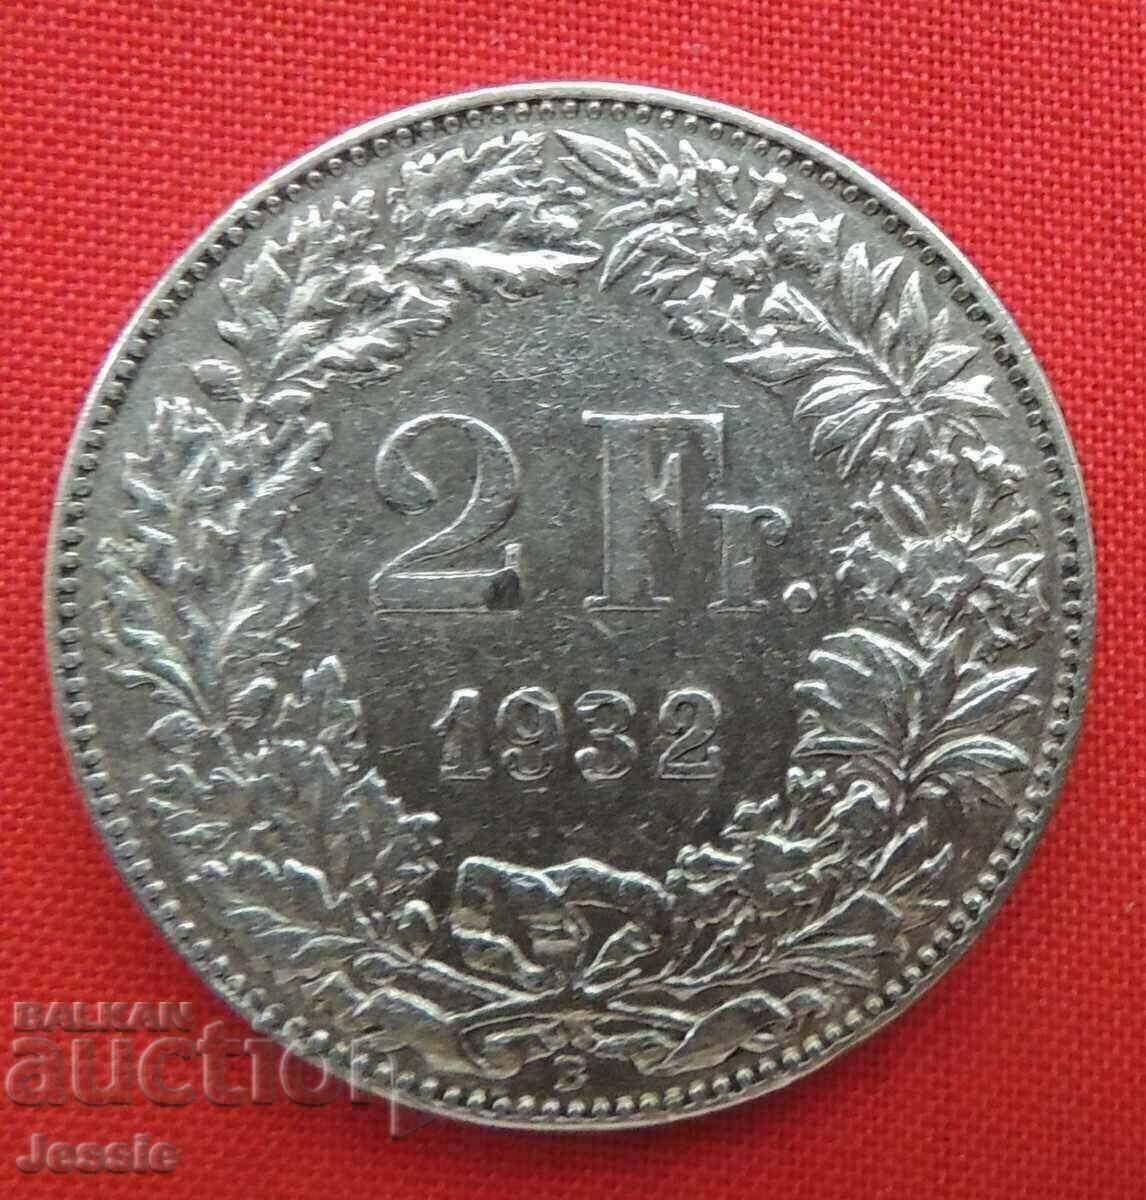 2 Francs 1932 B Switzerland Silver